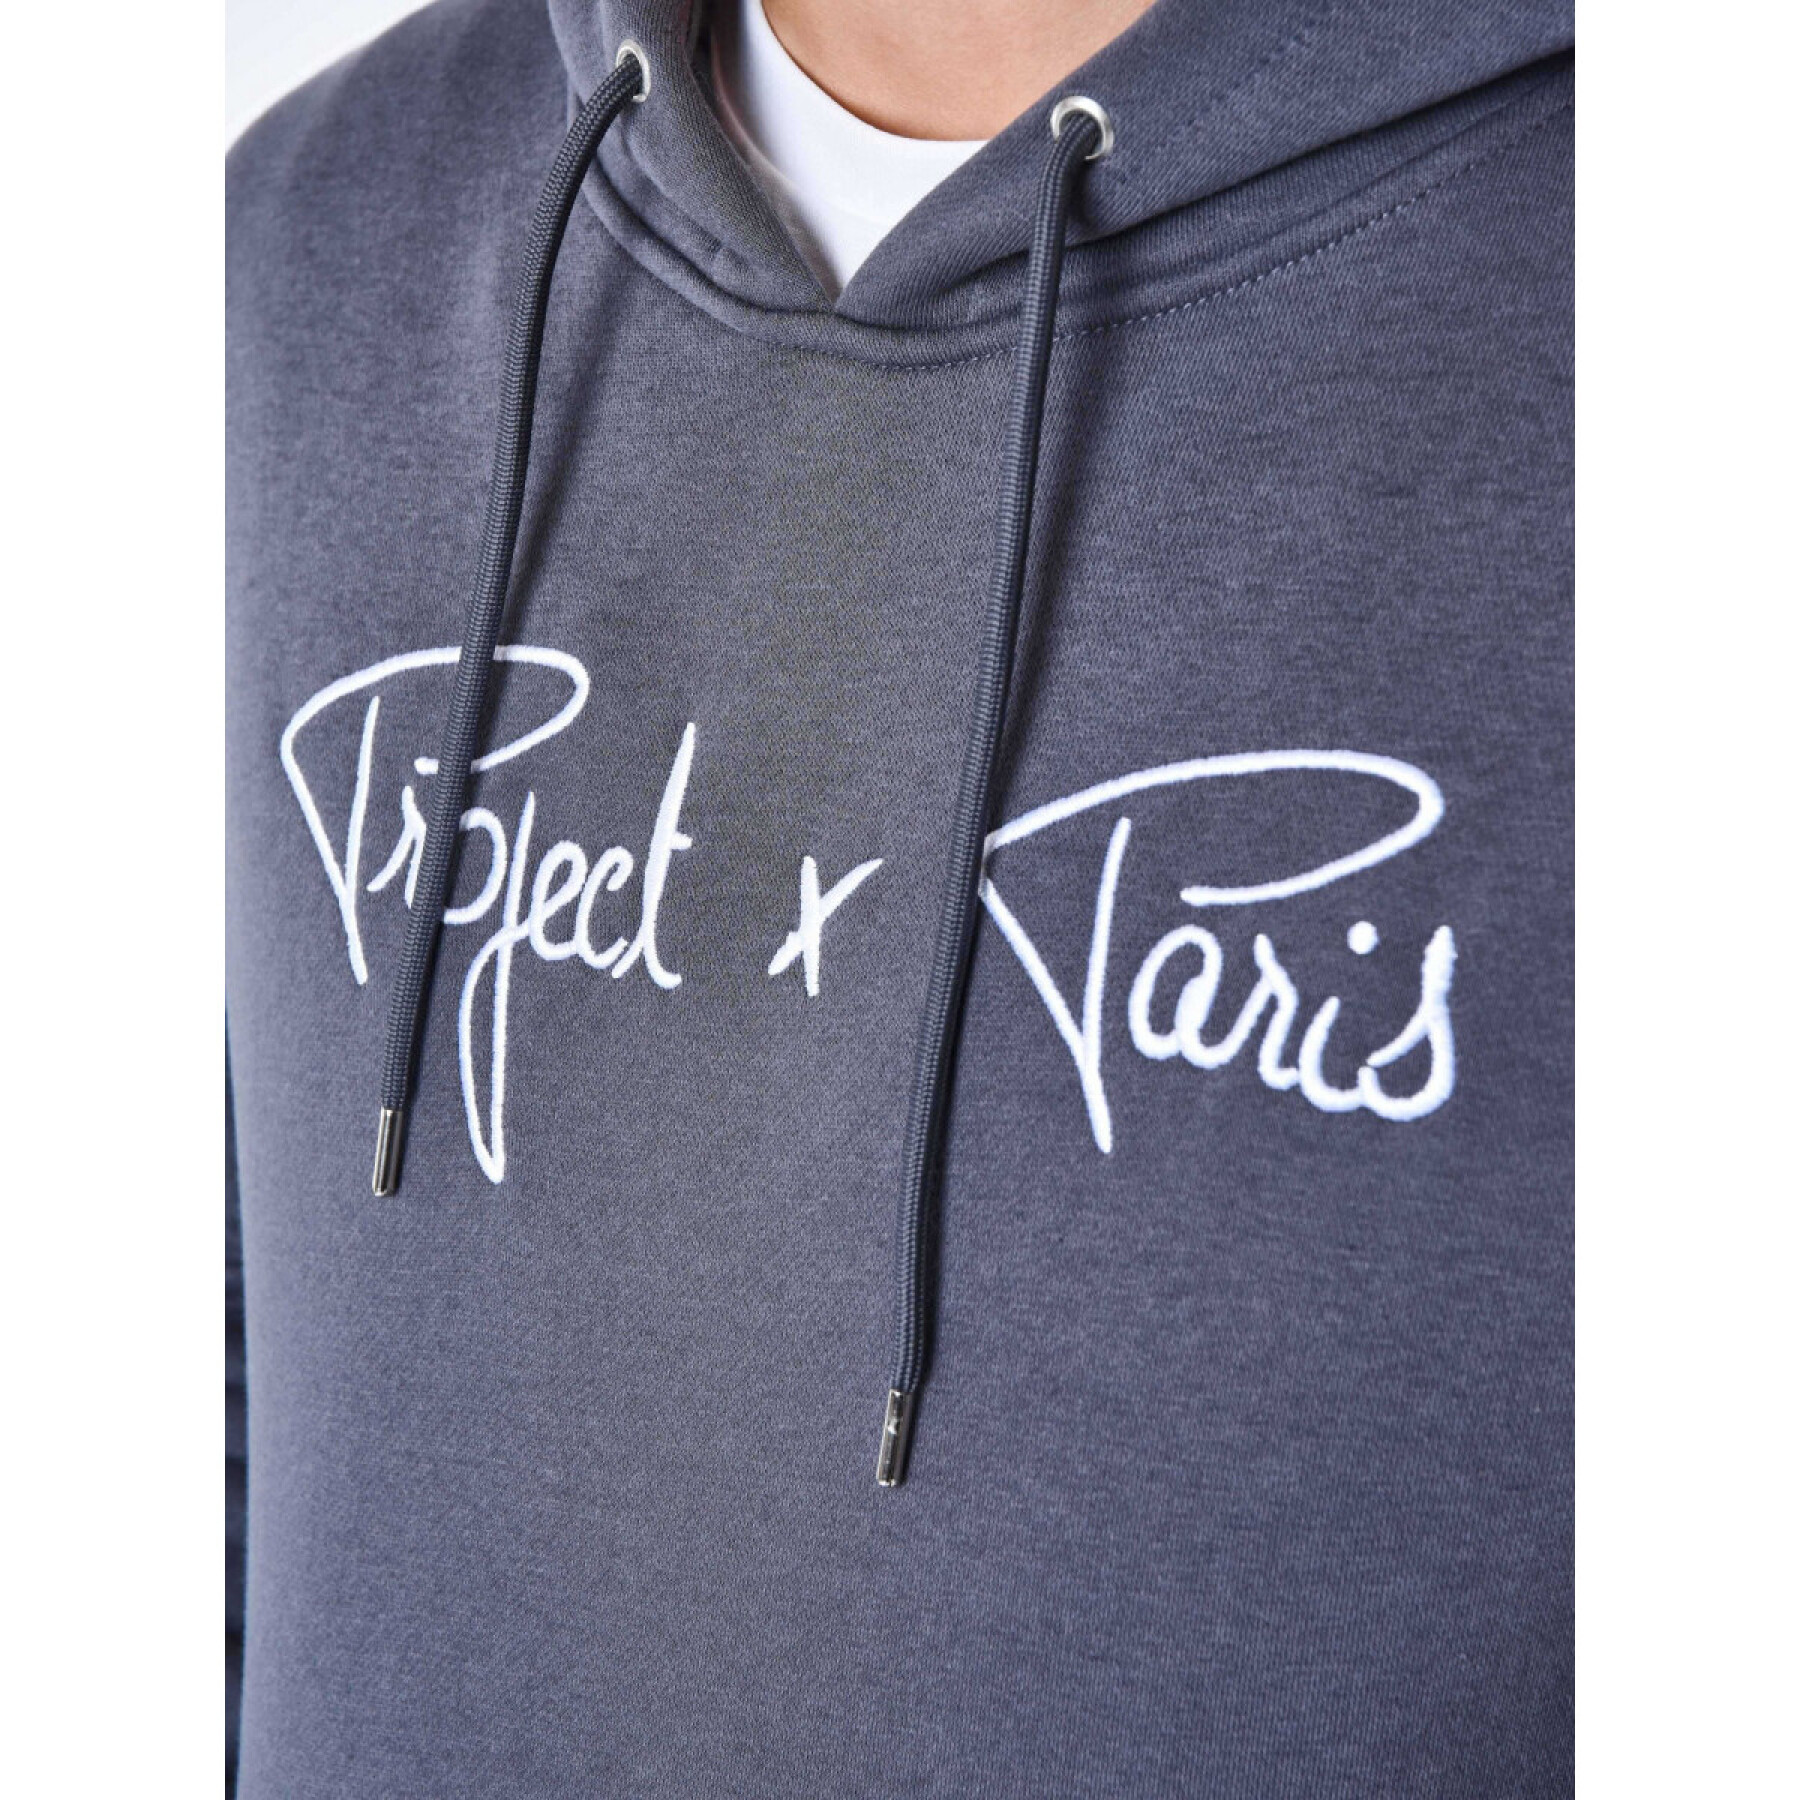 Hooded sweatshirt Project X Paris Essentials